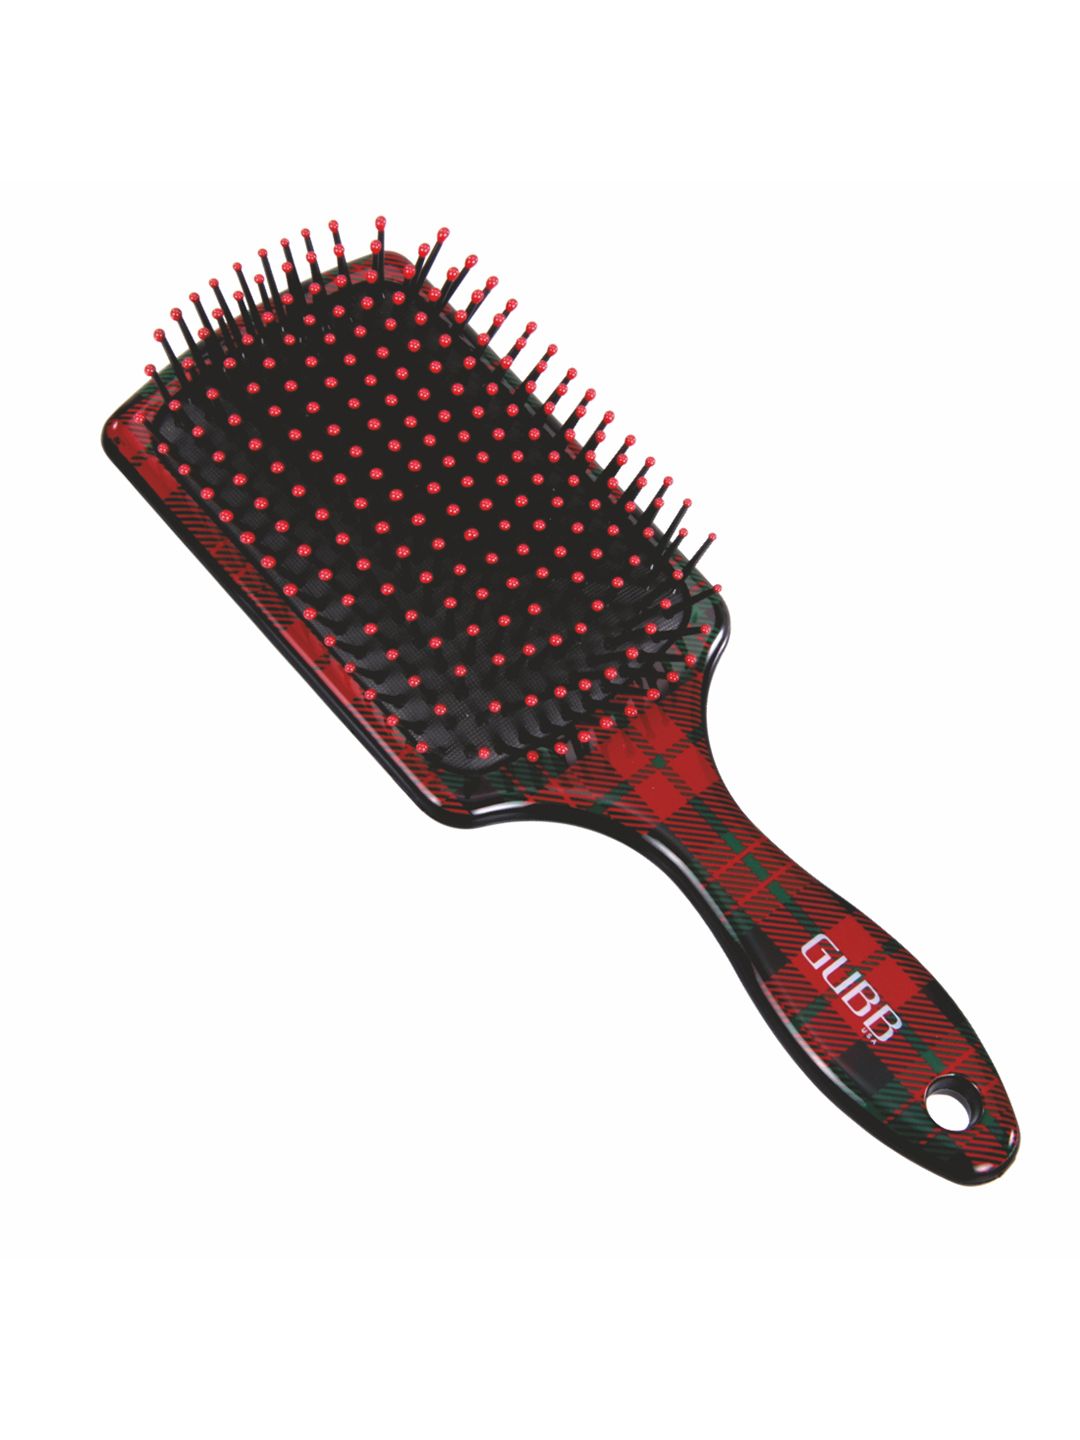 GUBB Red & Green Scottish Range Paddle Hair Brush Comb Price in India